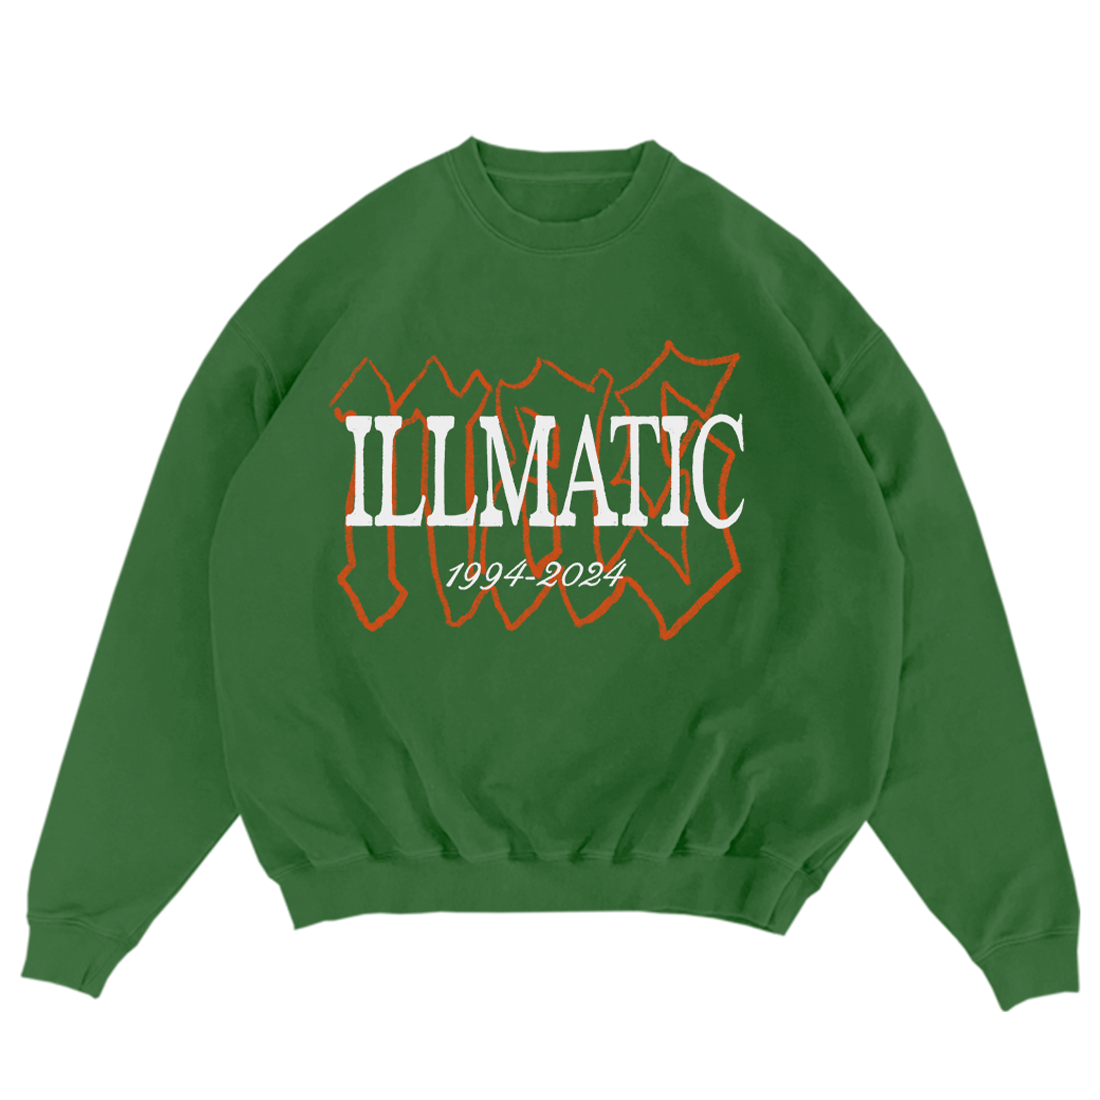 Green sweatshirt with &quot;Illmatic 1994-2023&quot; text, celebrating the album&#x27;s anniversary